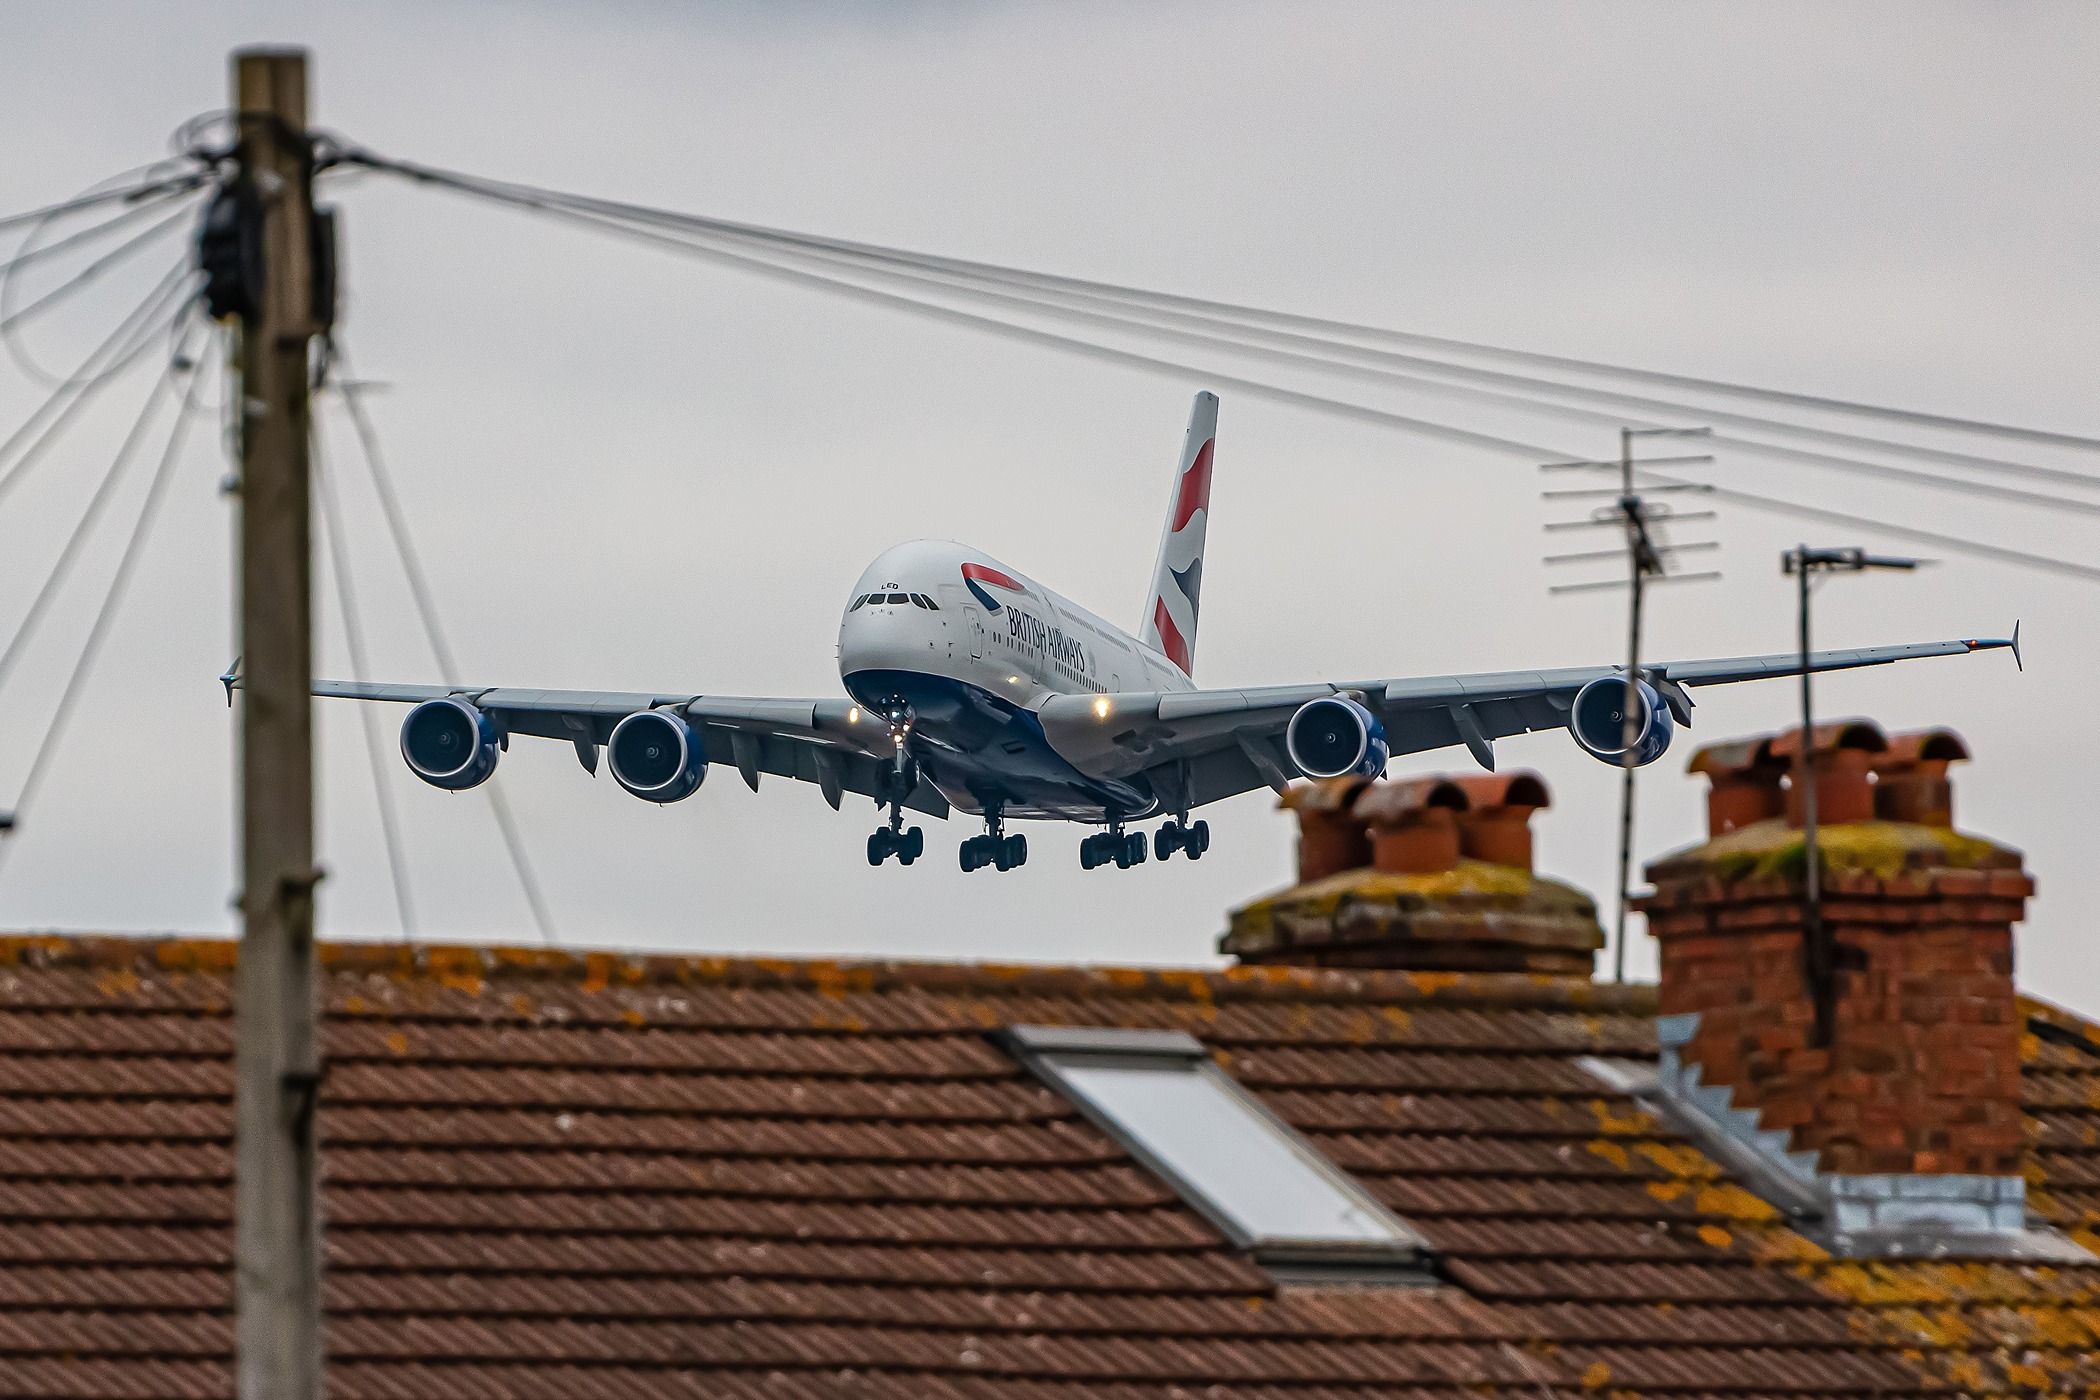 British Airways Airbus A380 on approach